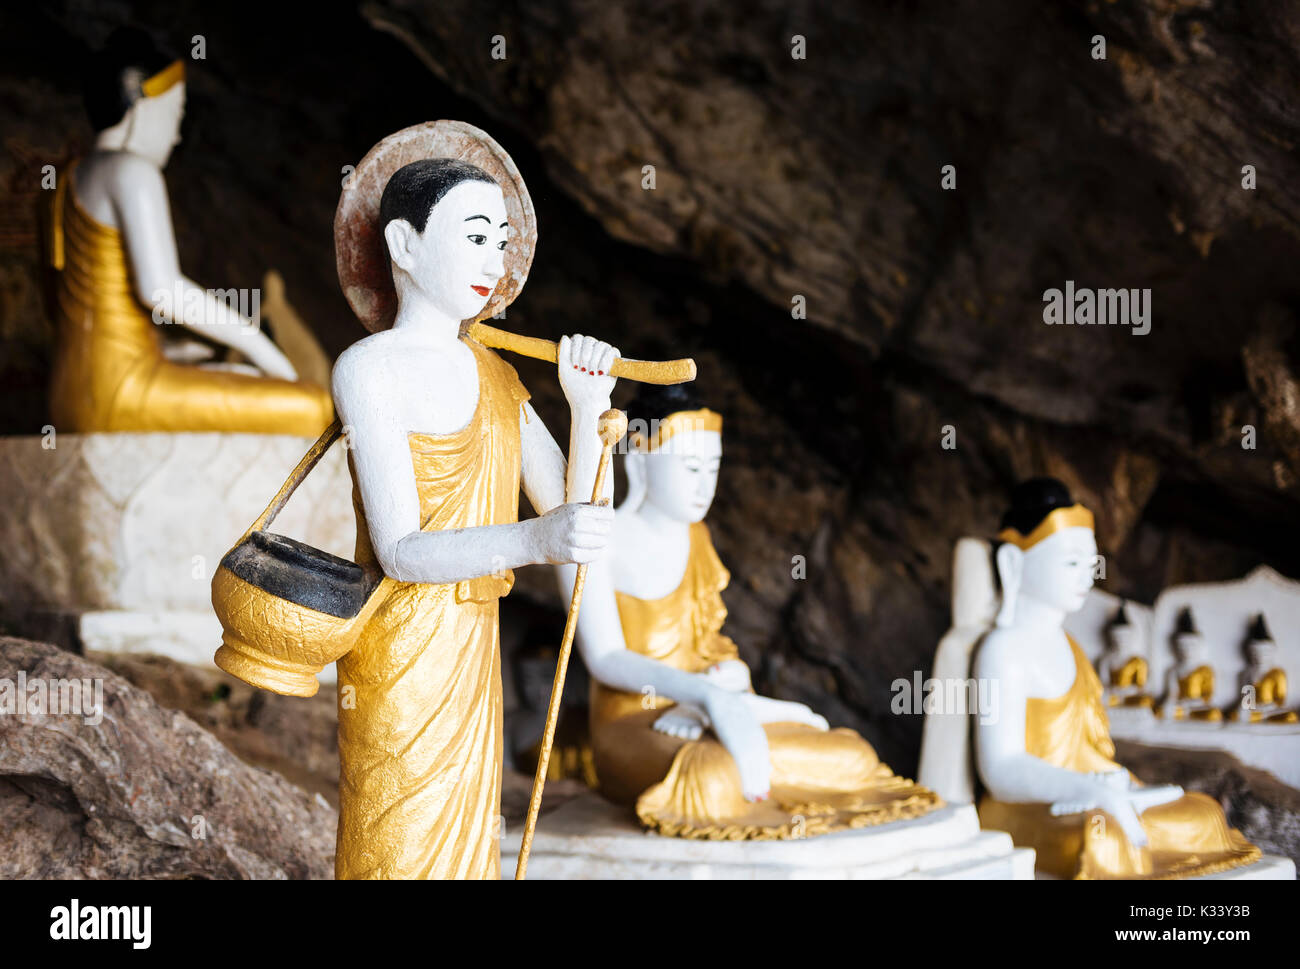 Statues of Buddha, Yathe Byan Cave, Hpa-an, Kayin State. Myanmar, Asia Stock Photo